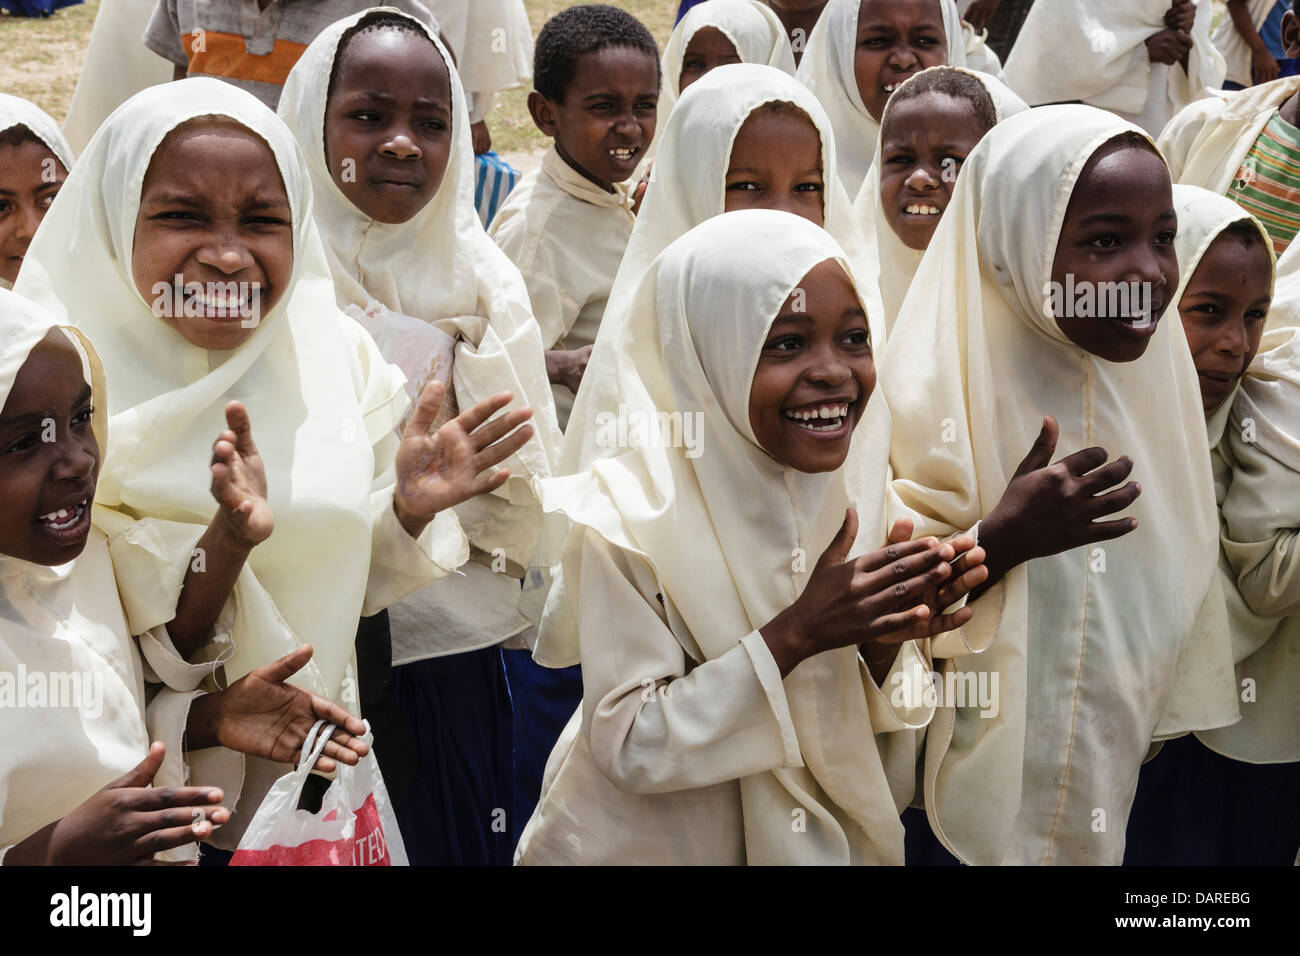 Africa, Tanzania, Zanzibar, Pemba Island. Schoolgirls in hijab. Stock Photo